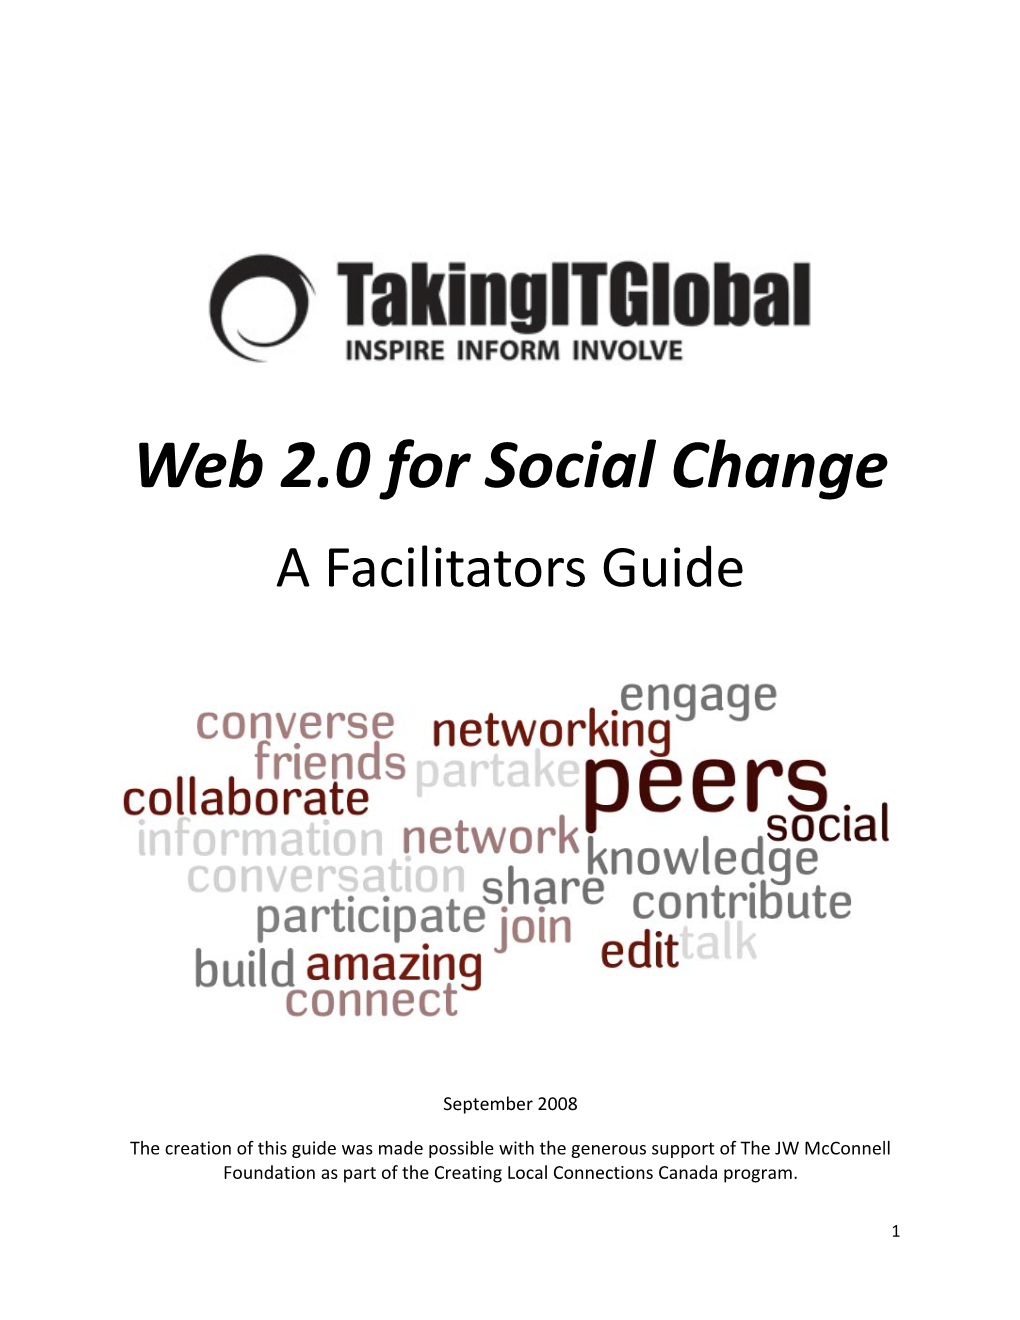 Web 2.0 for Social Change a Facilitators Guide